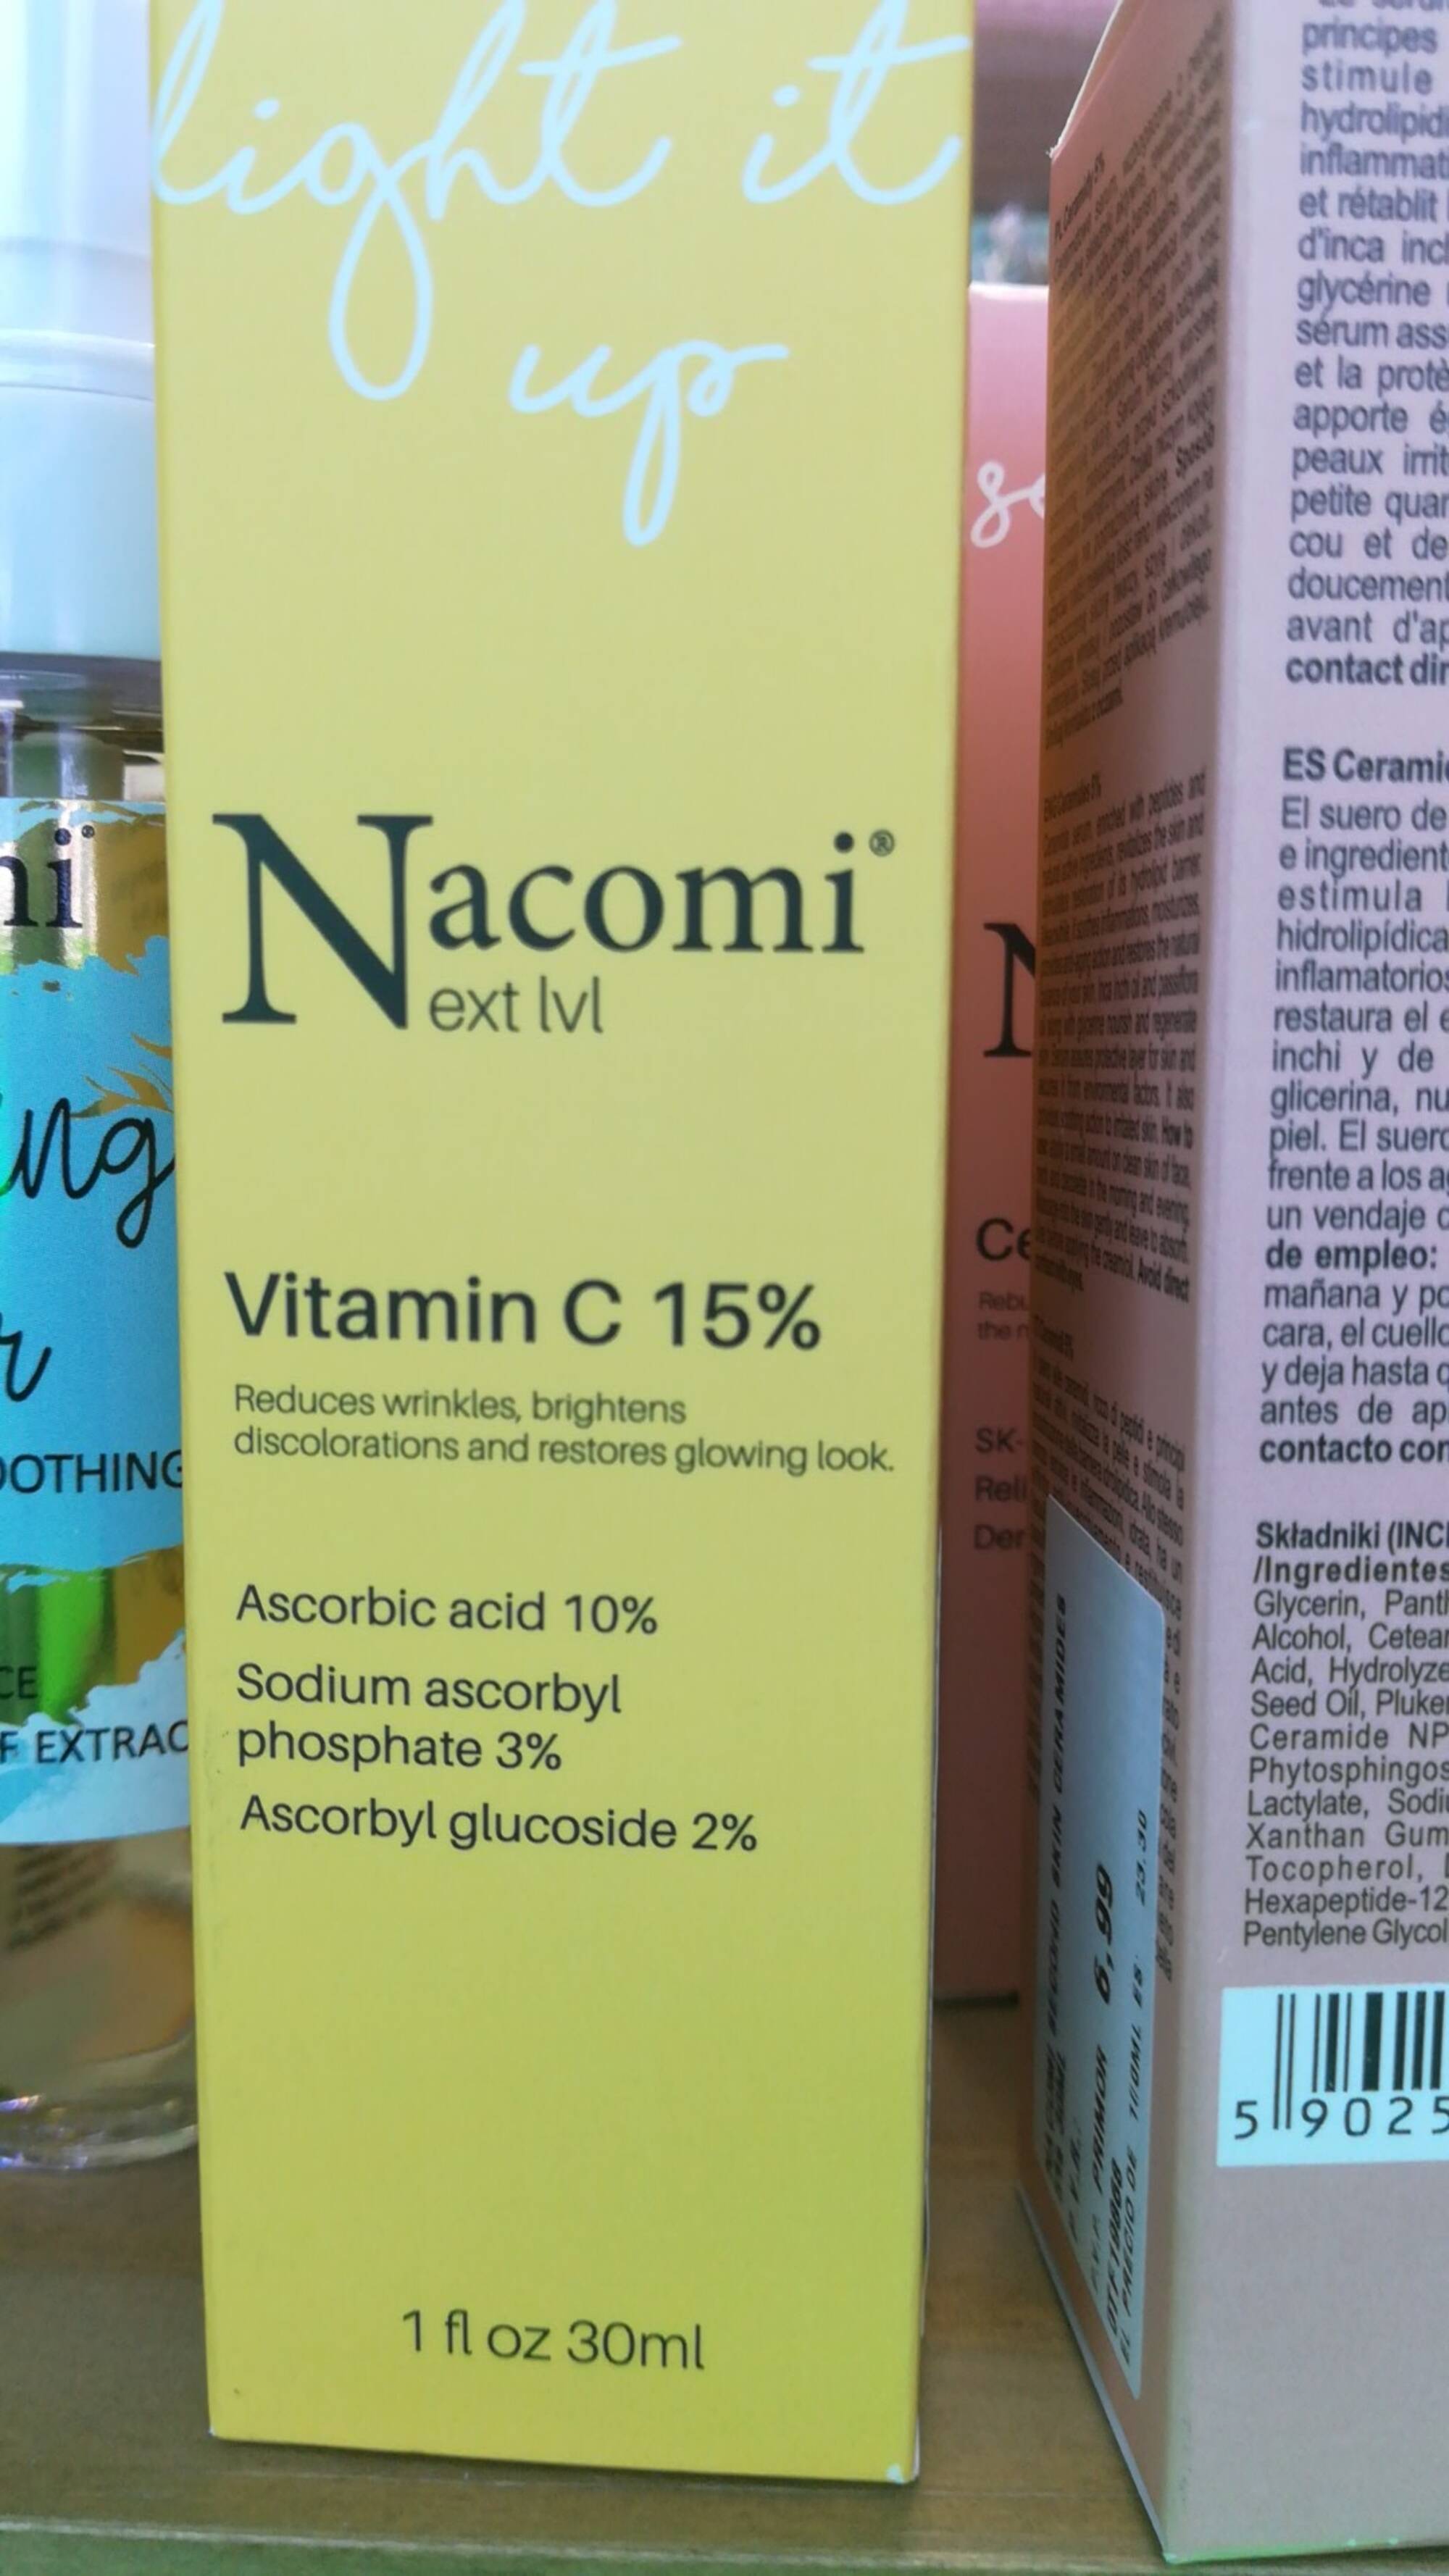 NACOMI - Light it up - Vitamin C 15%